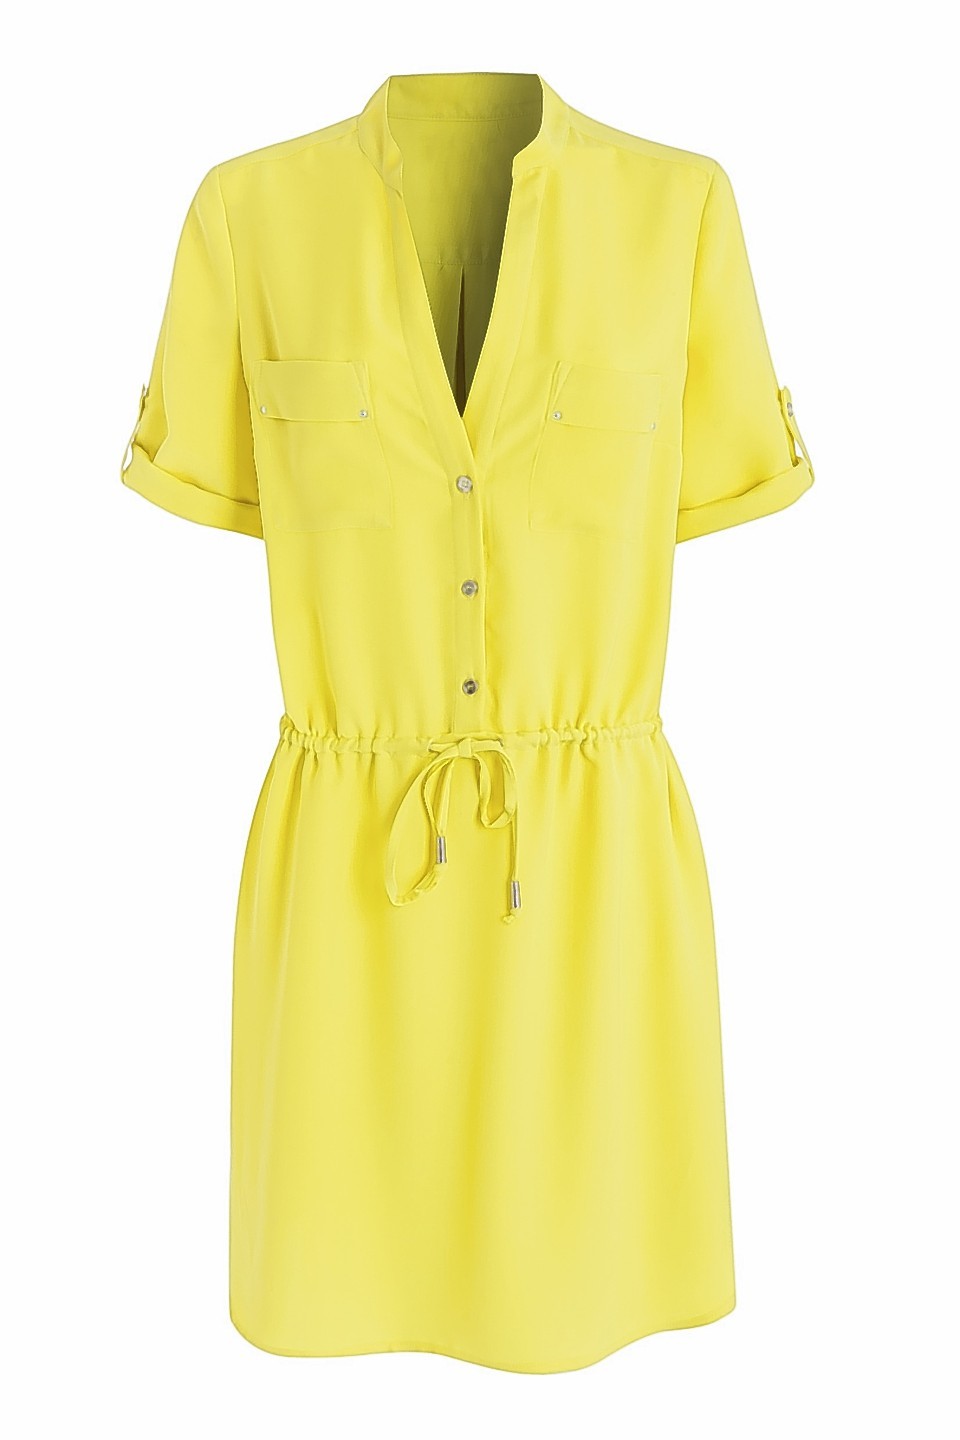 Principles by Ben de Lisi Designer Lime Pocket Shirt Dress, £40 (www.debenhams.com)